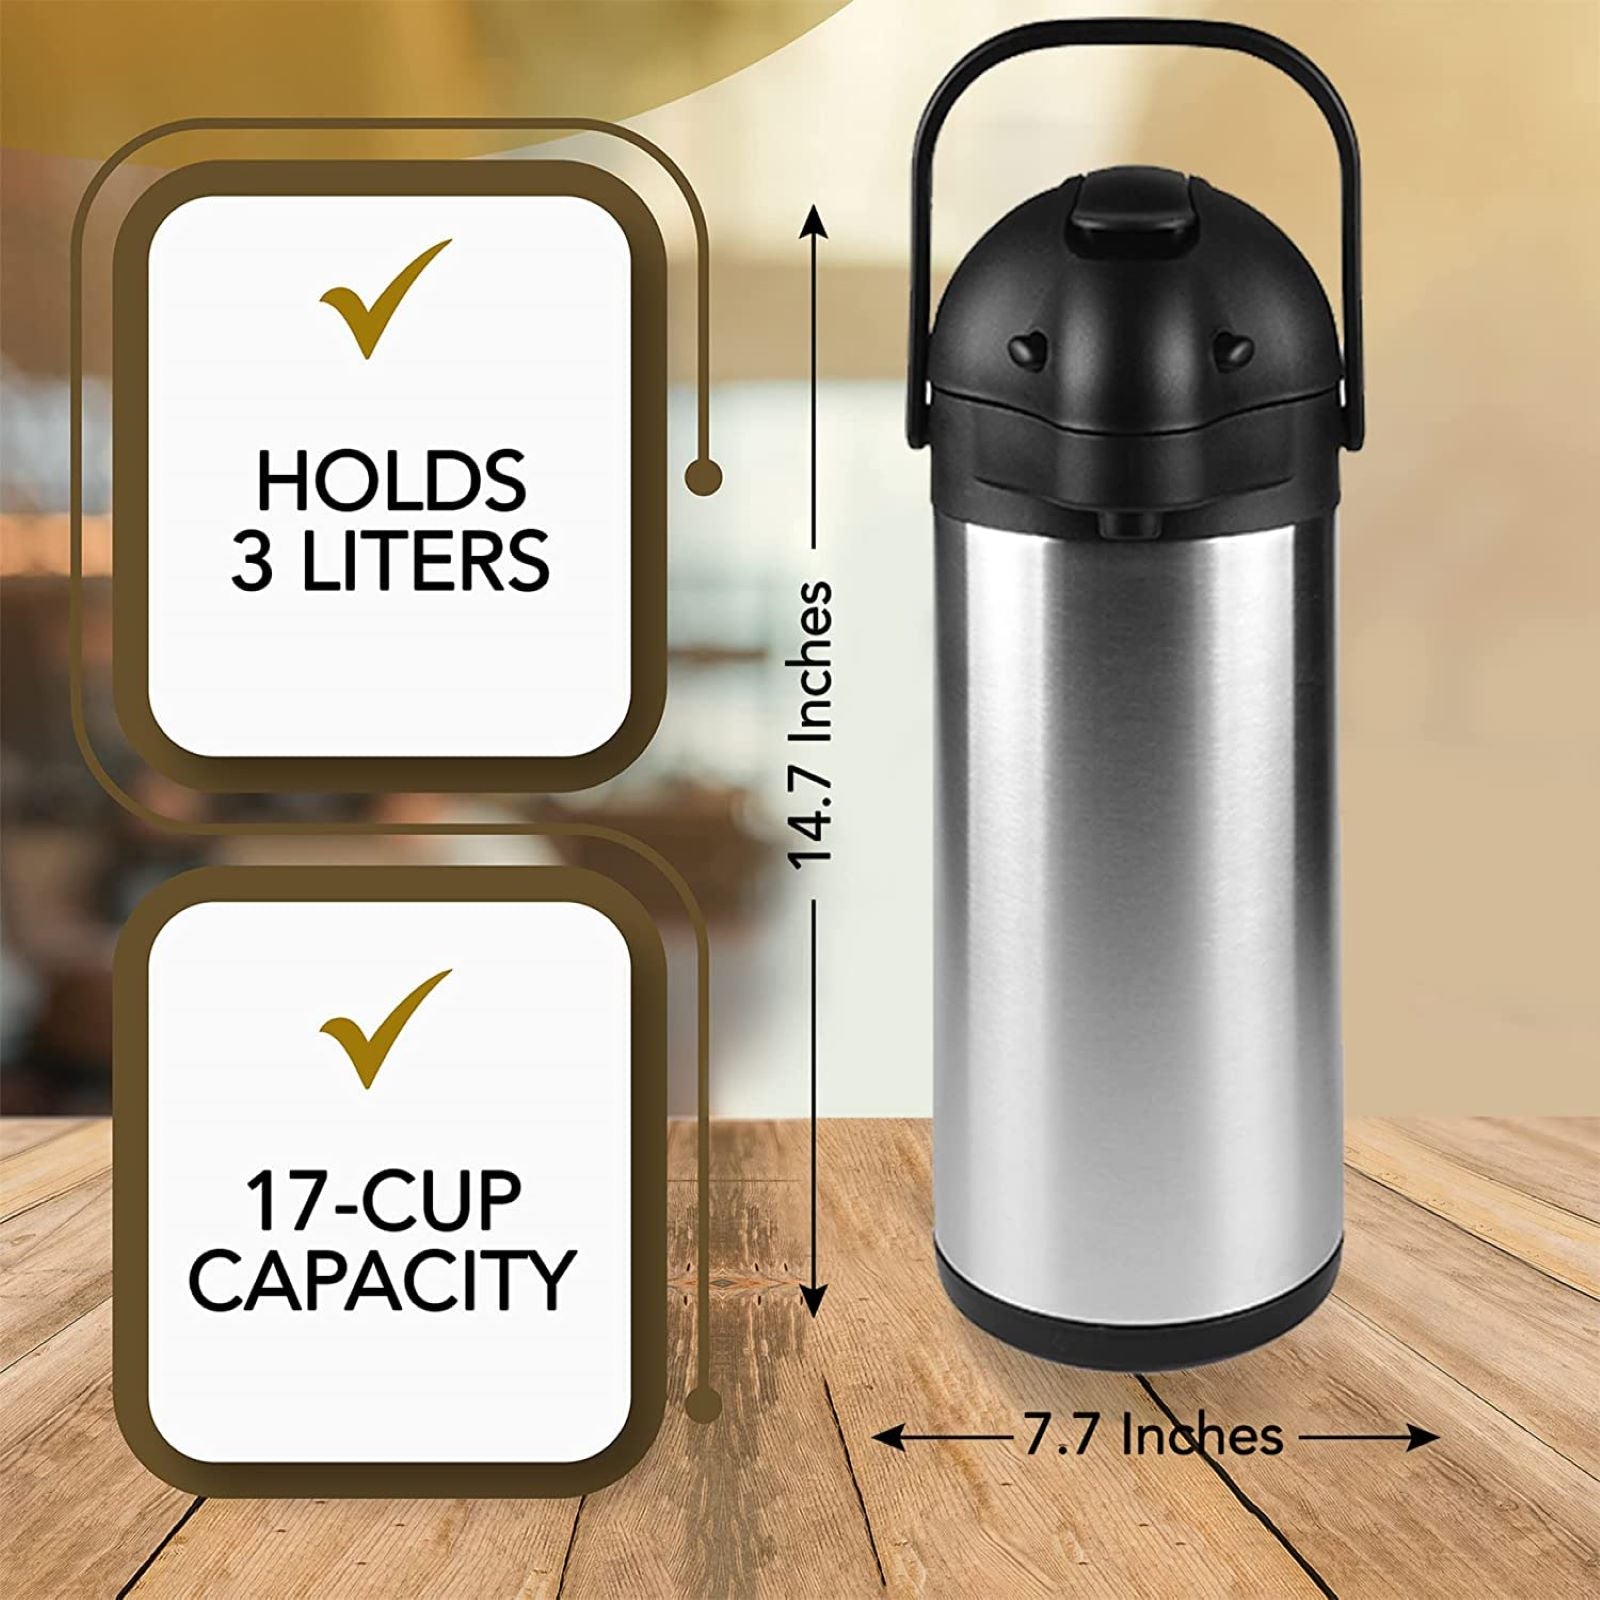  Coffee Carafe Dispenser with Pump - 101oz / 3L Airpot